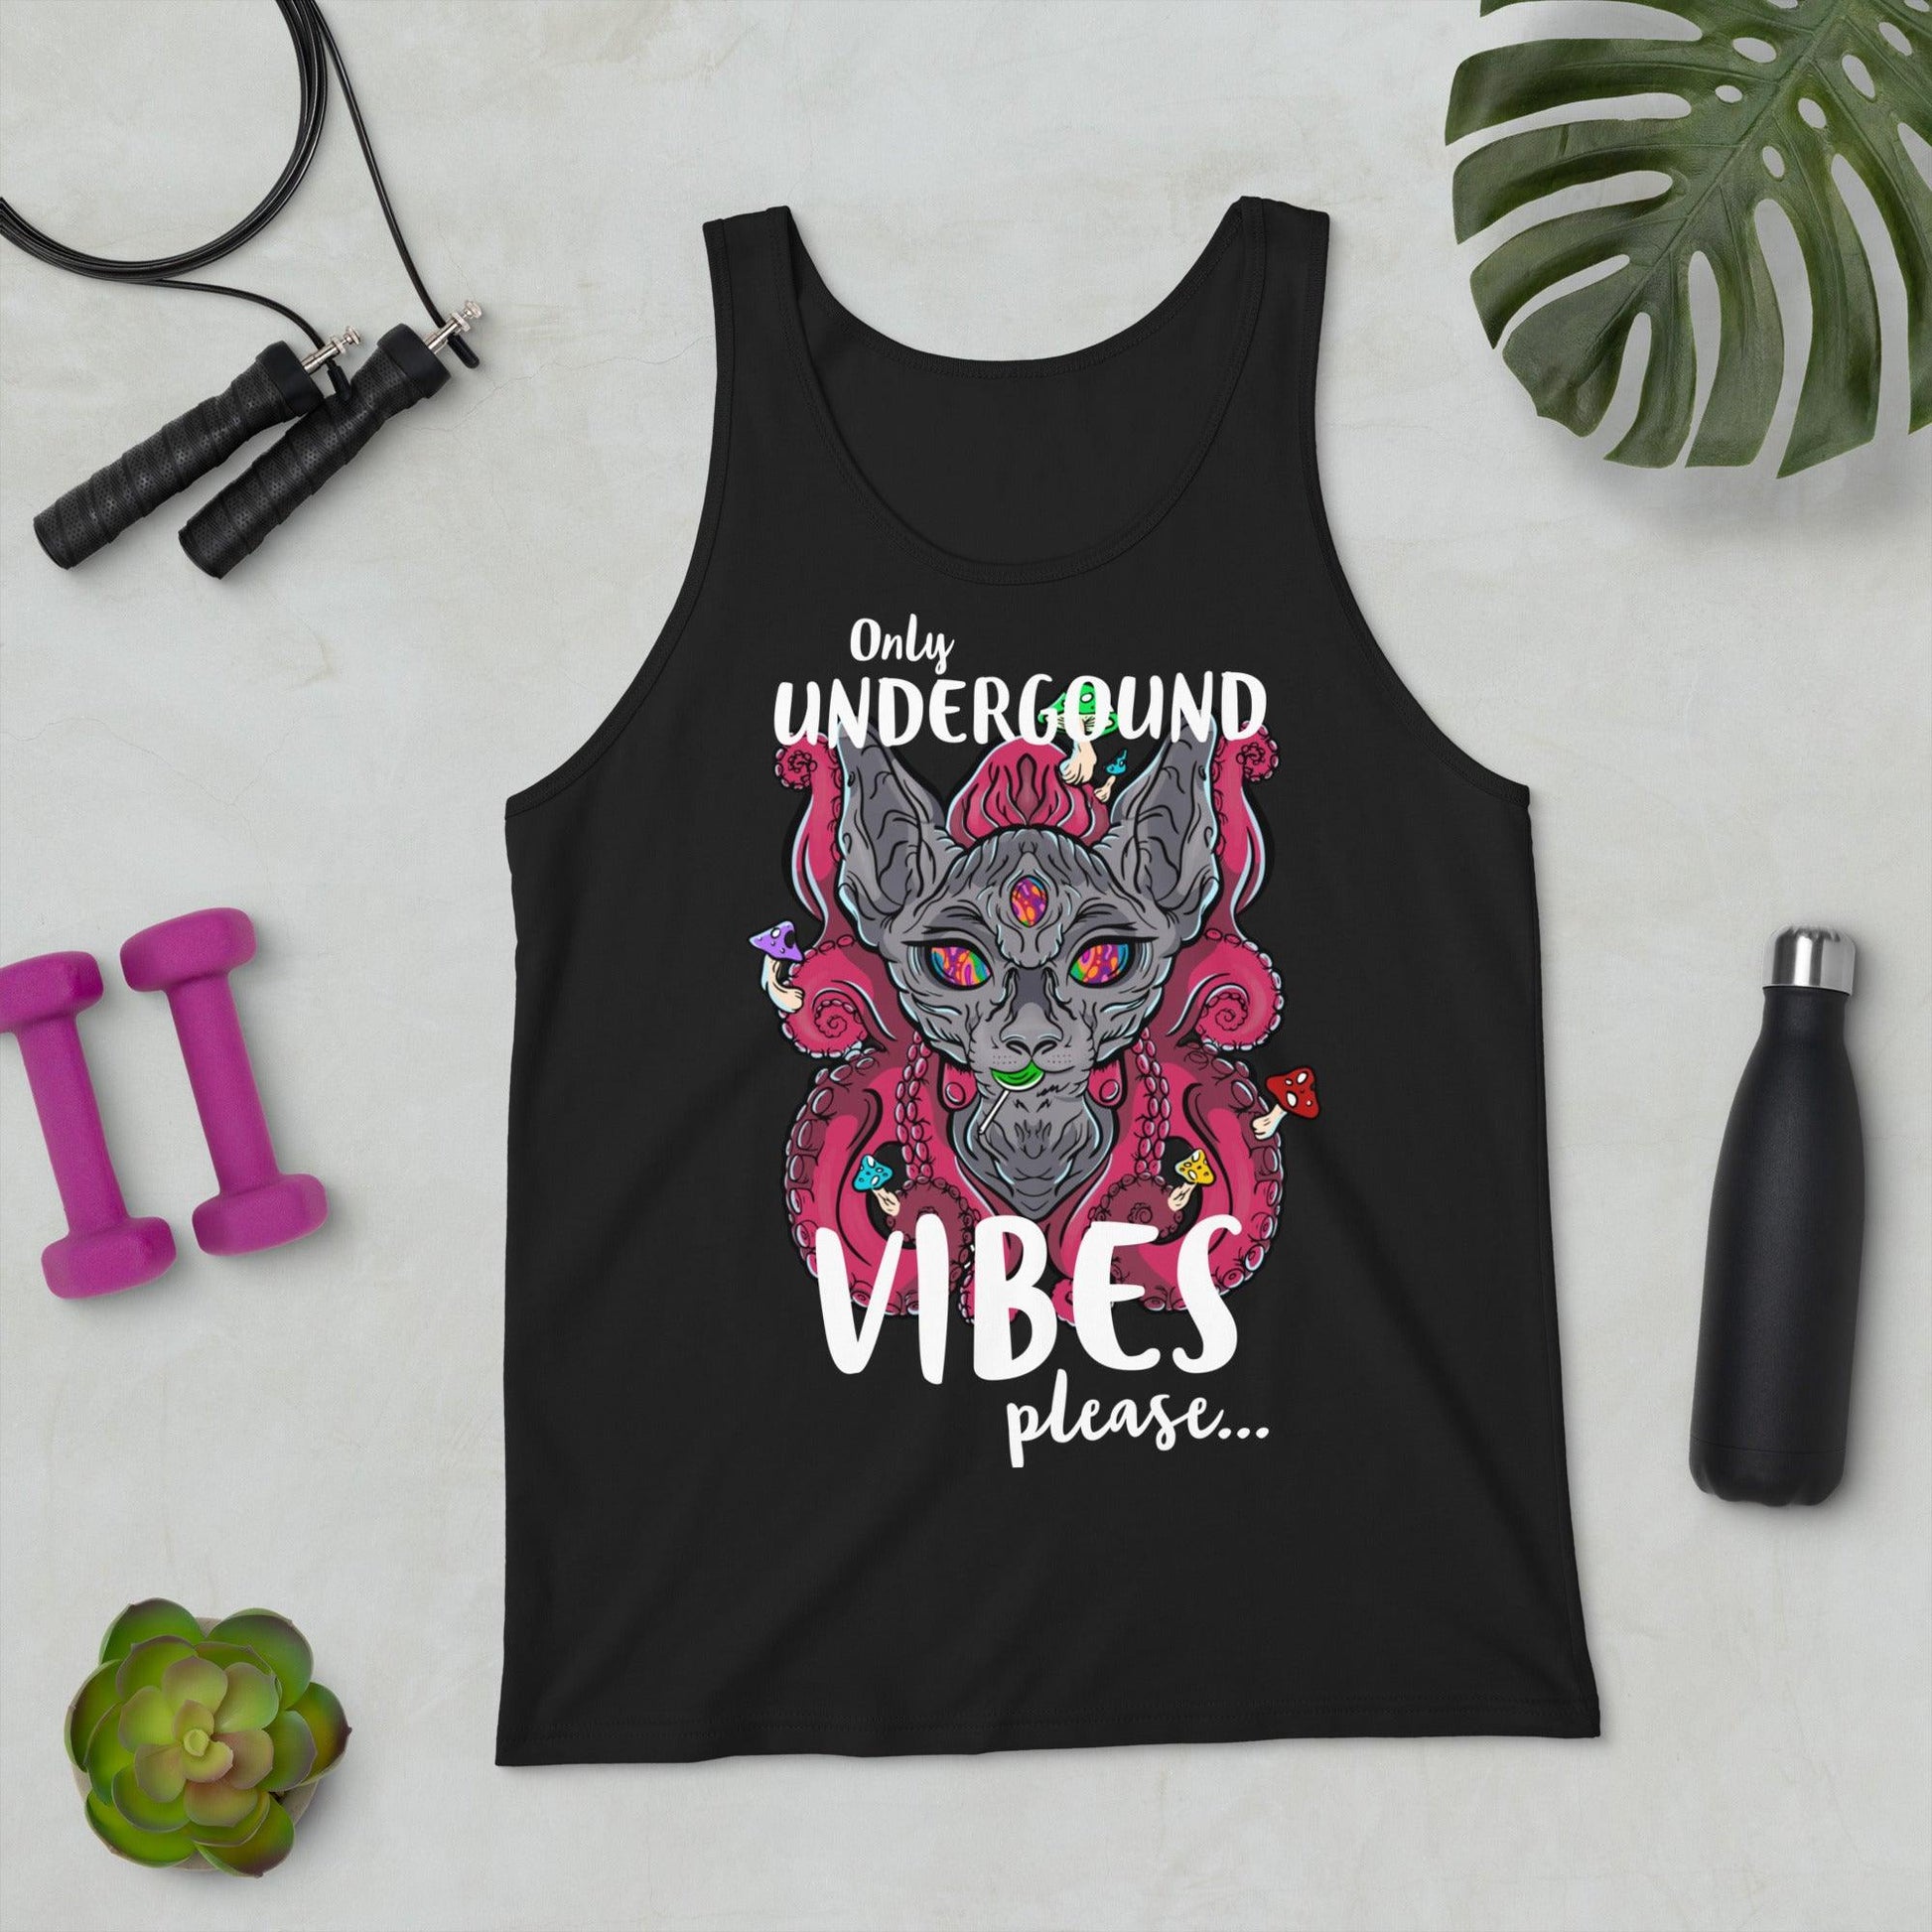 Only underground vibes, please - Unisex Tank Top - CatsOnDrugs